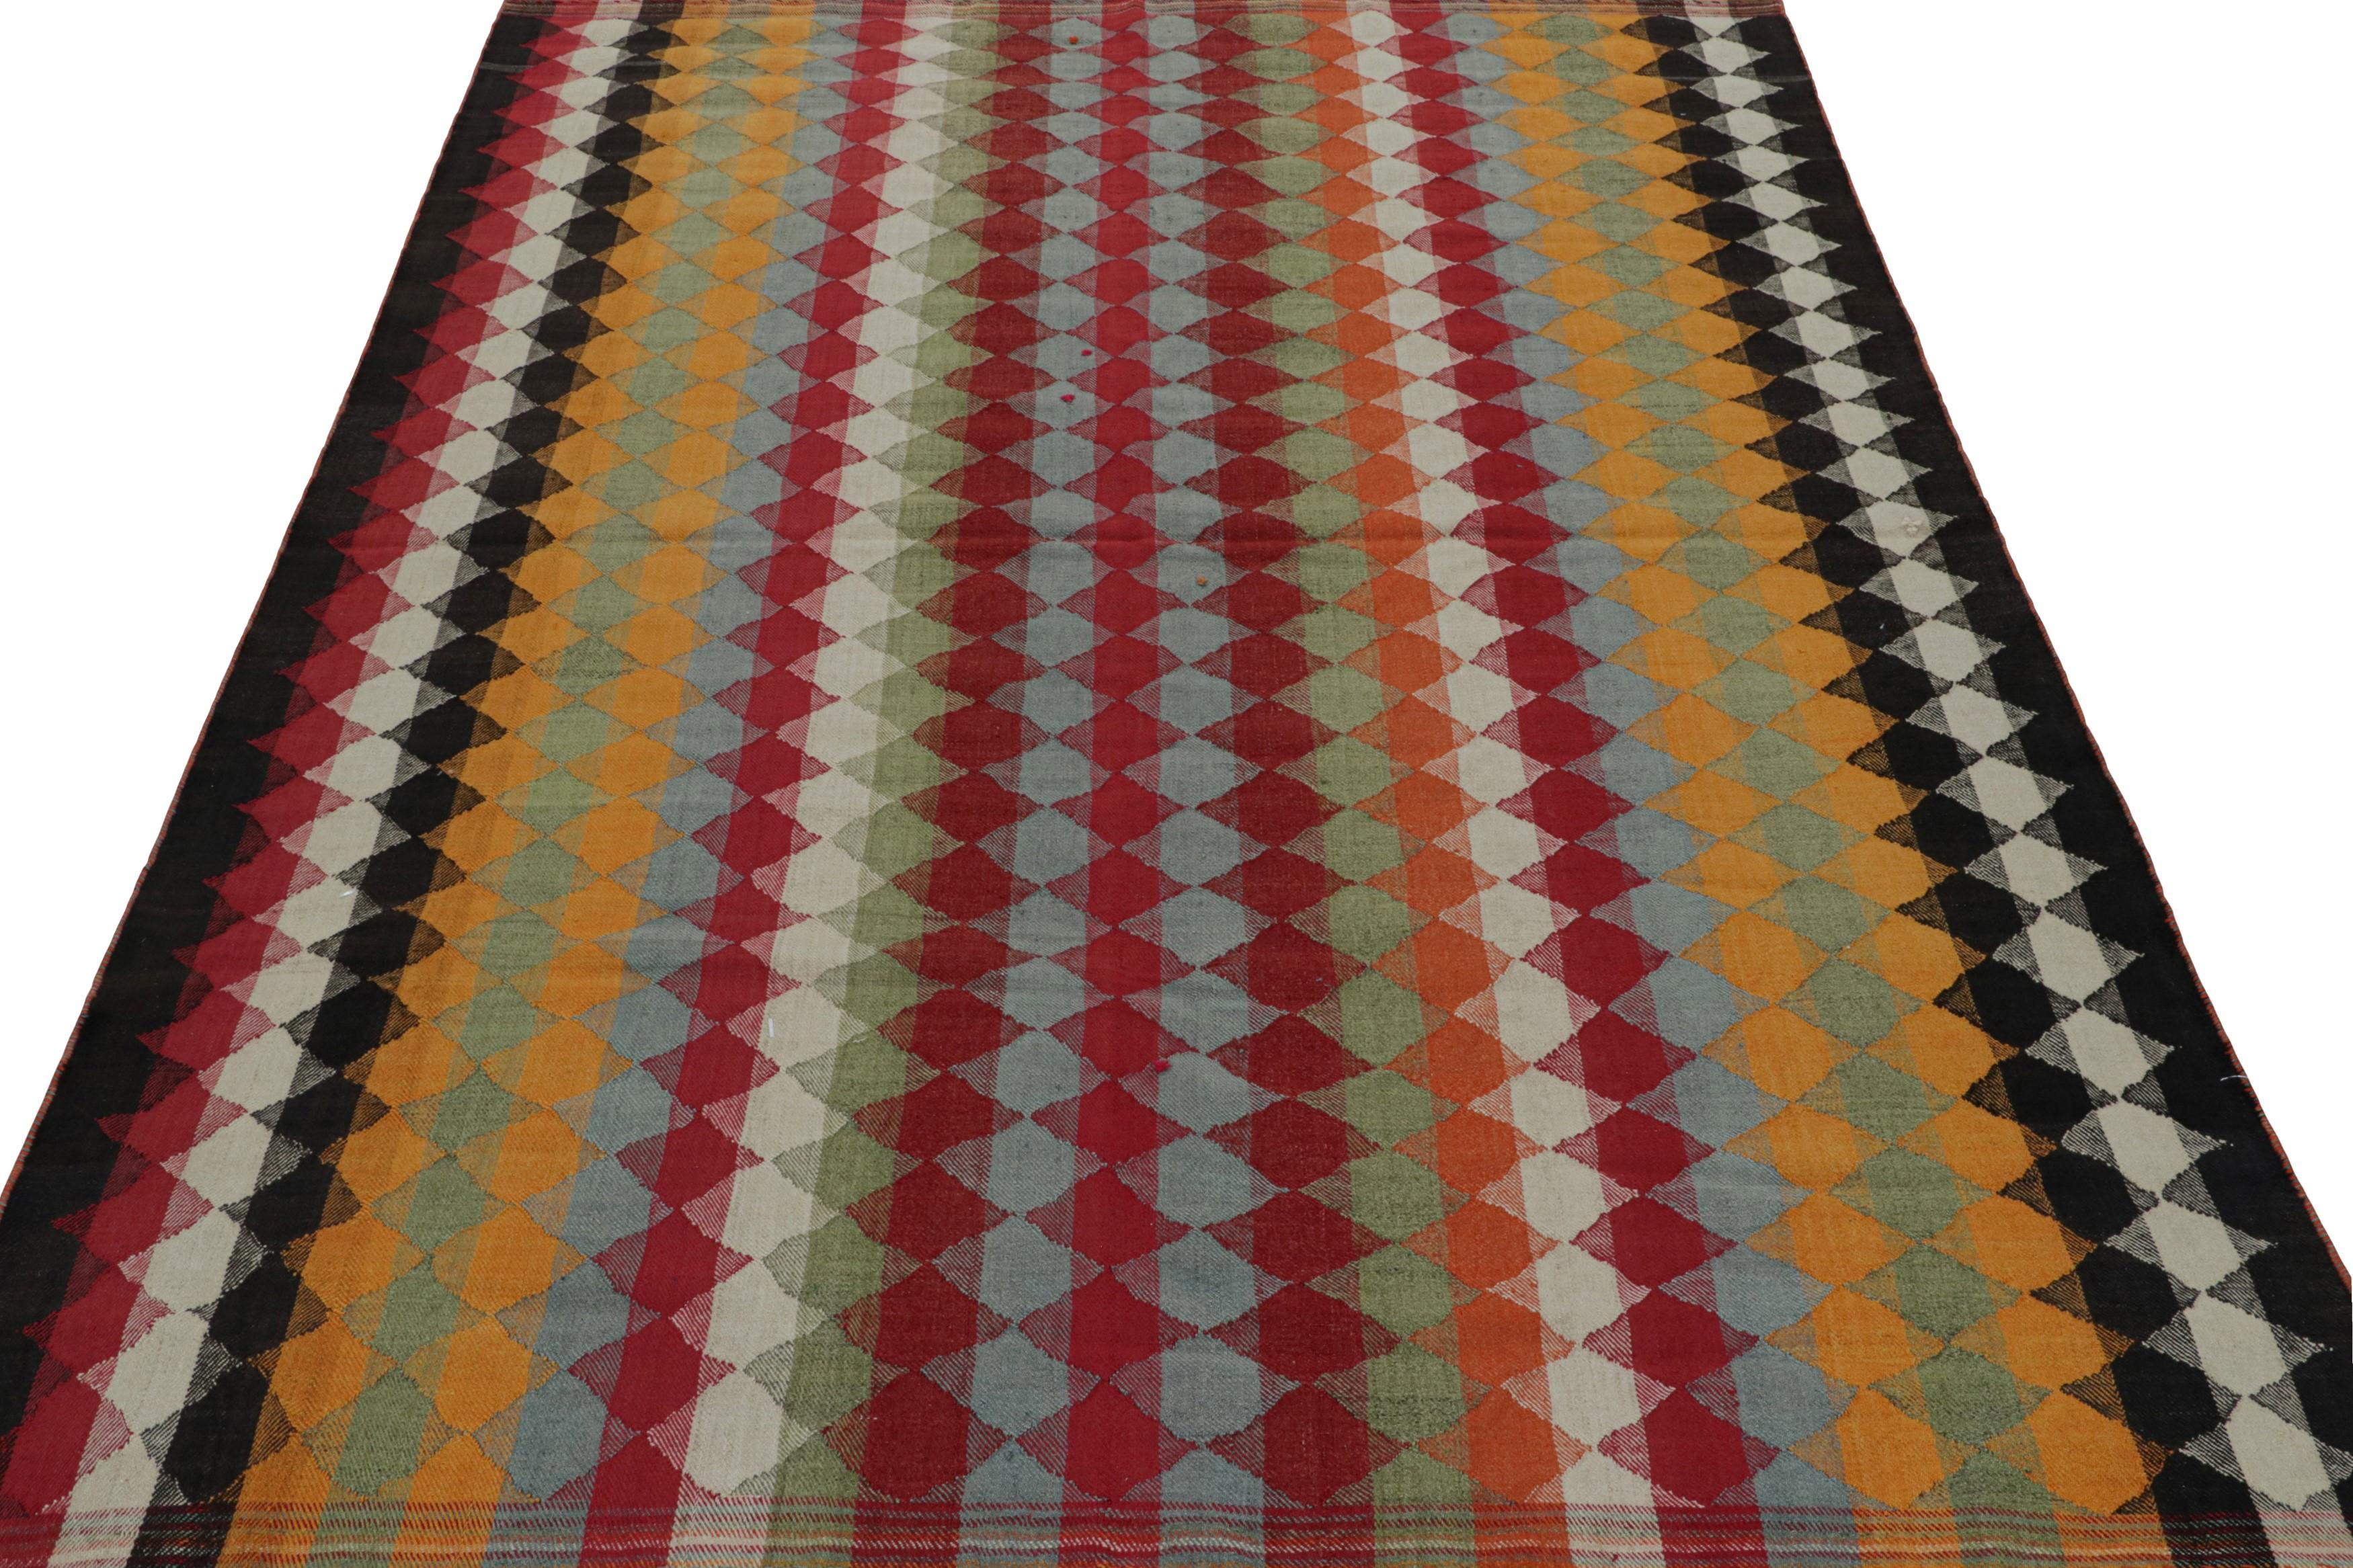 Tribal Vintage tribal Afghan Kilim rug, with Geometric Patterns, from Rug & Kilim For Sale